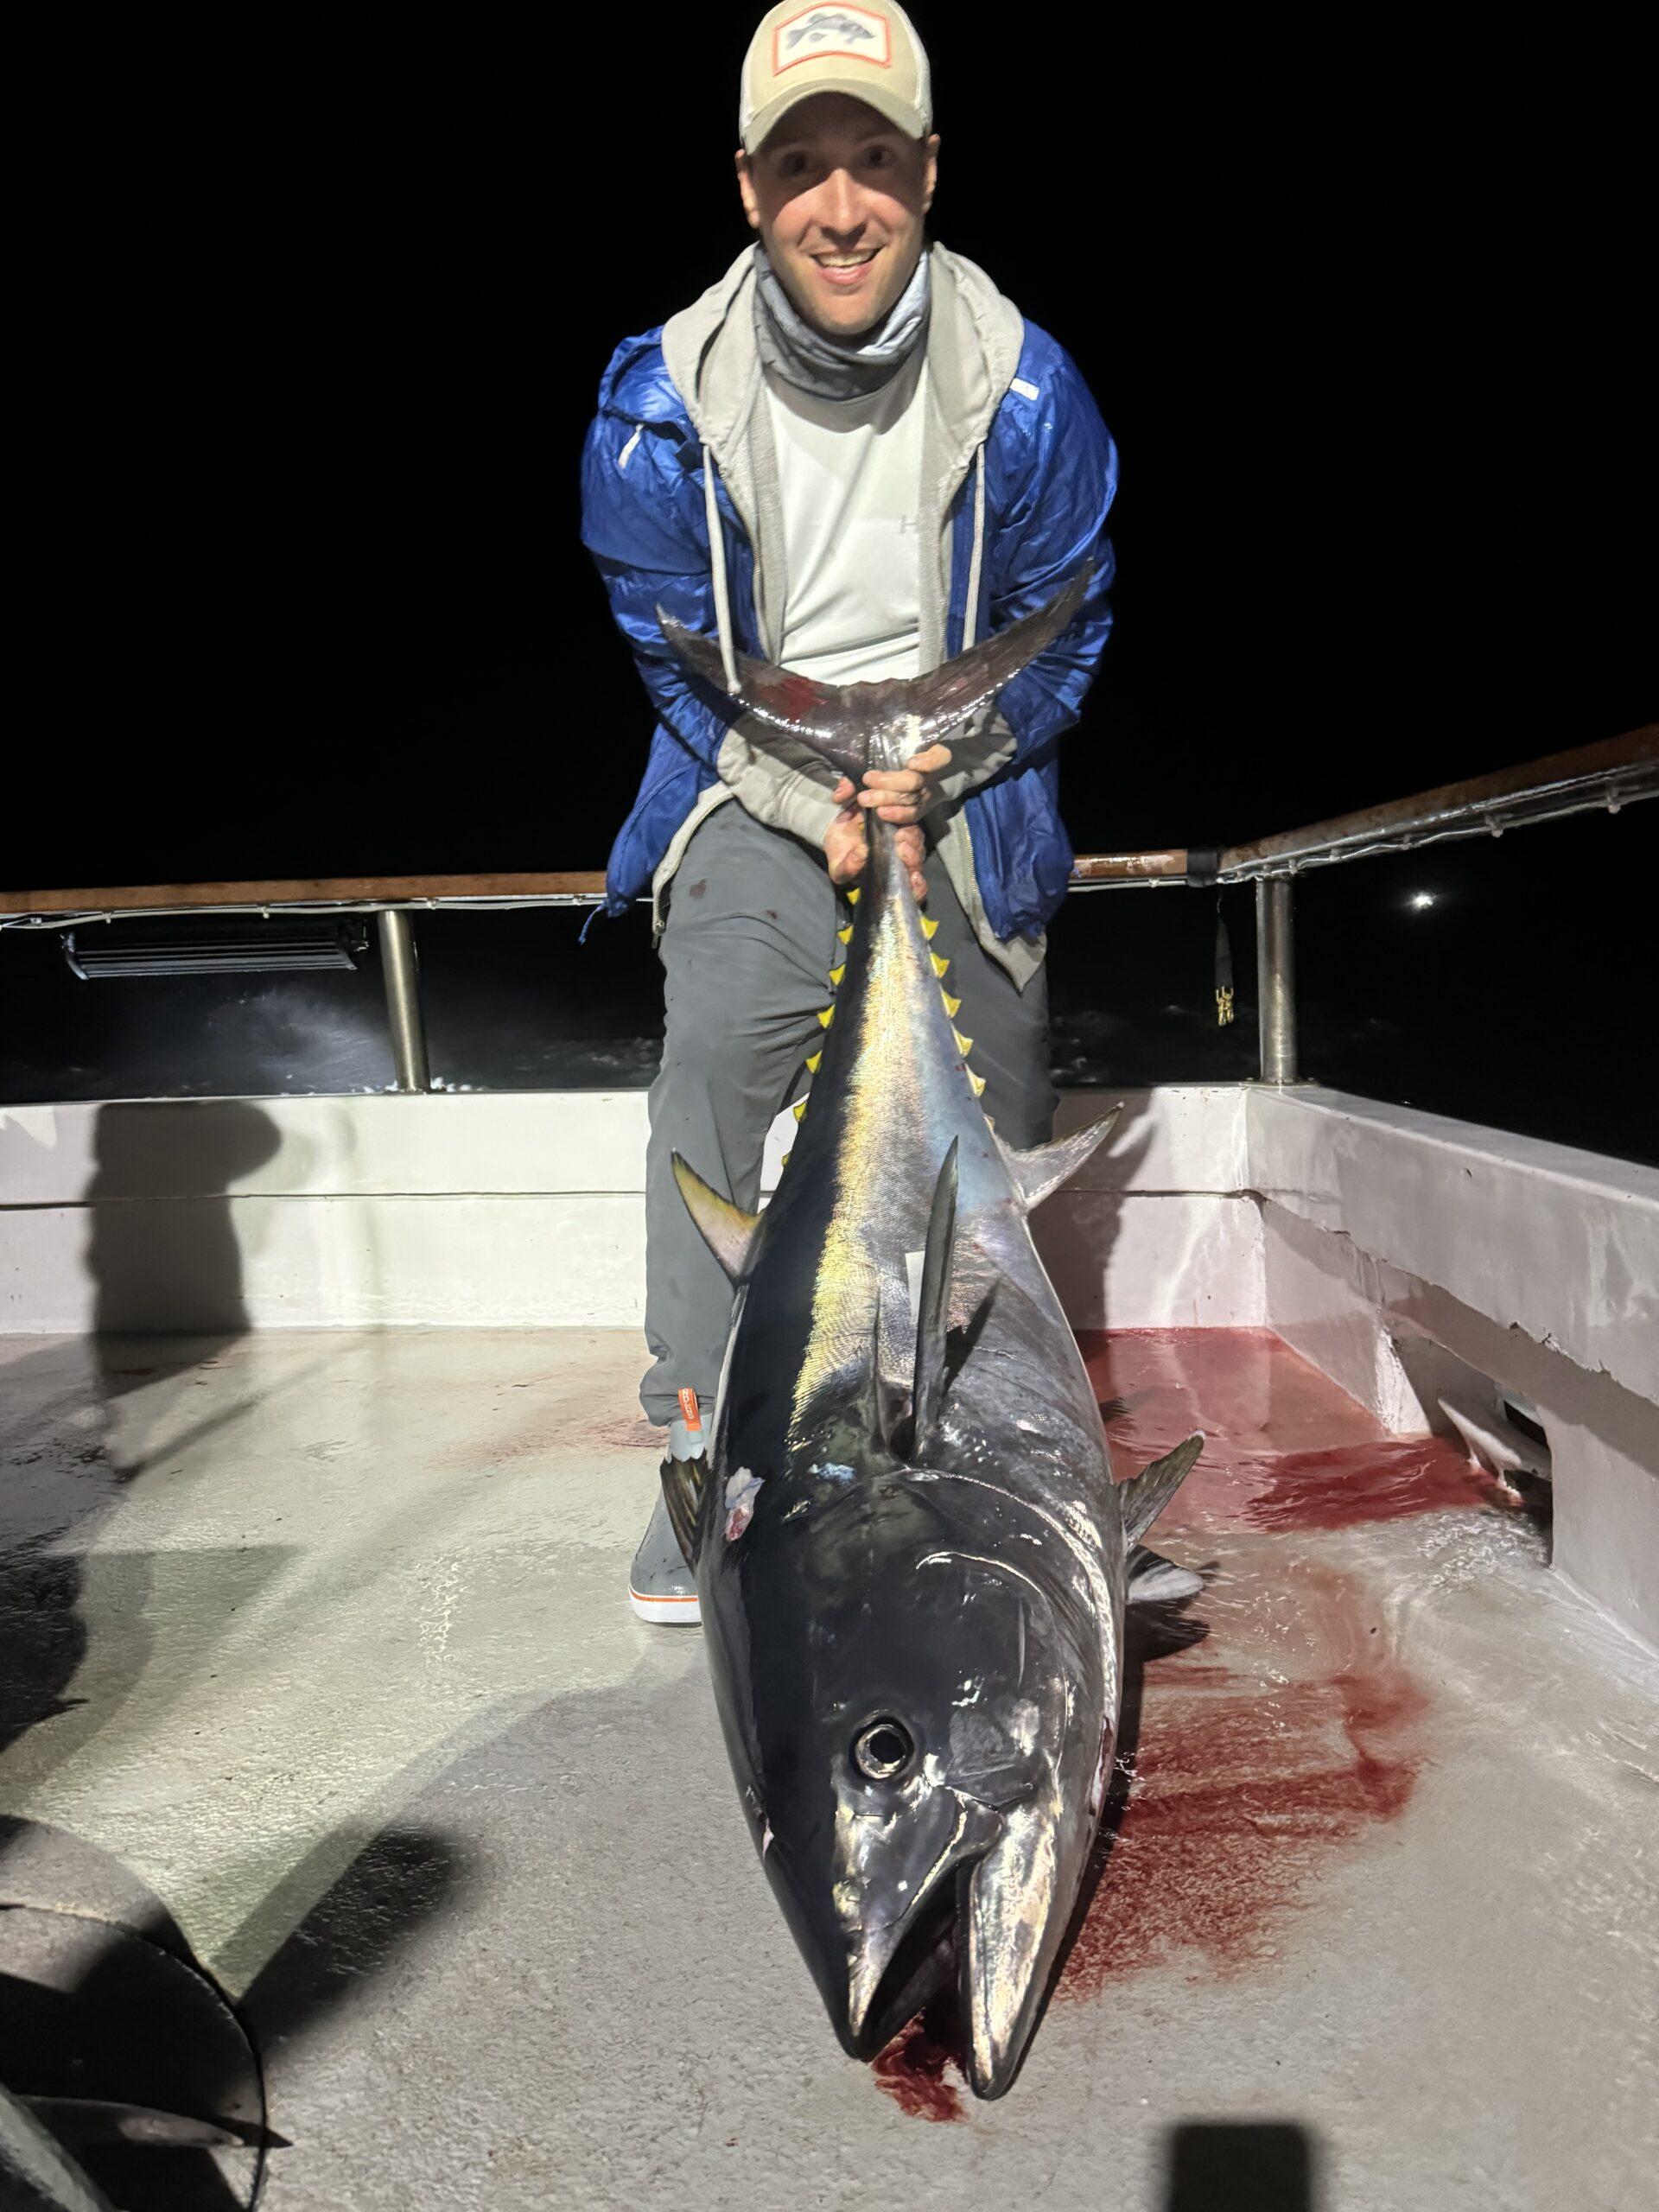 Angler holding a 70 lb. bluefin tuna.